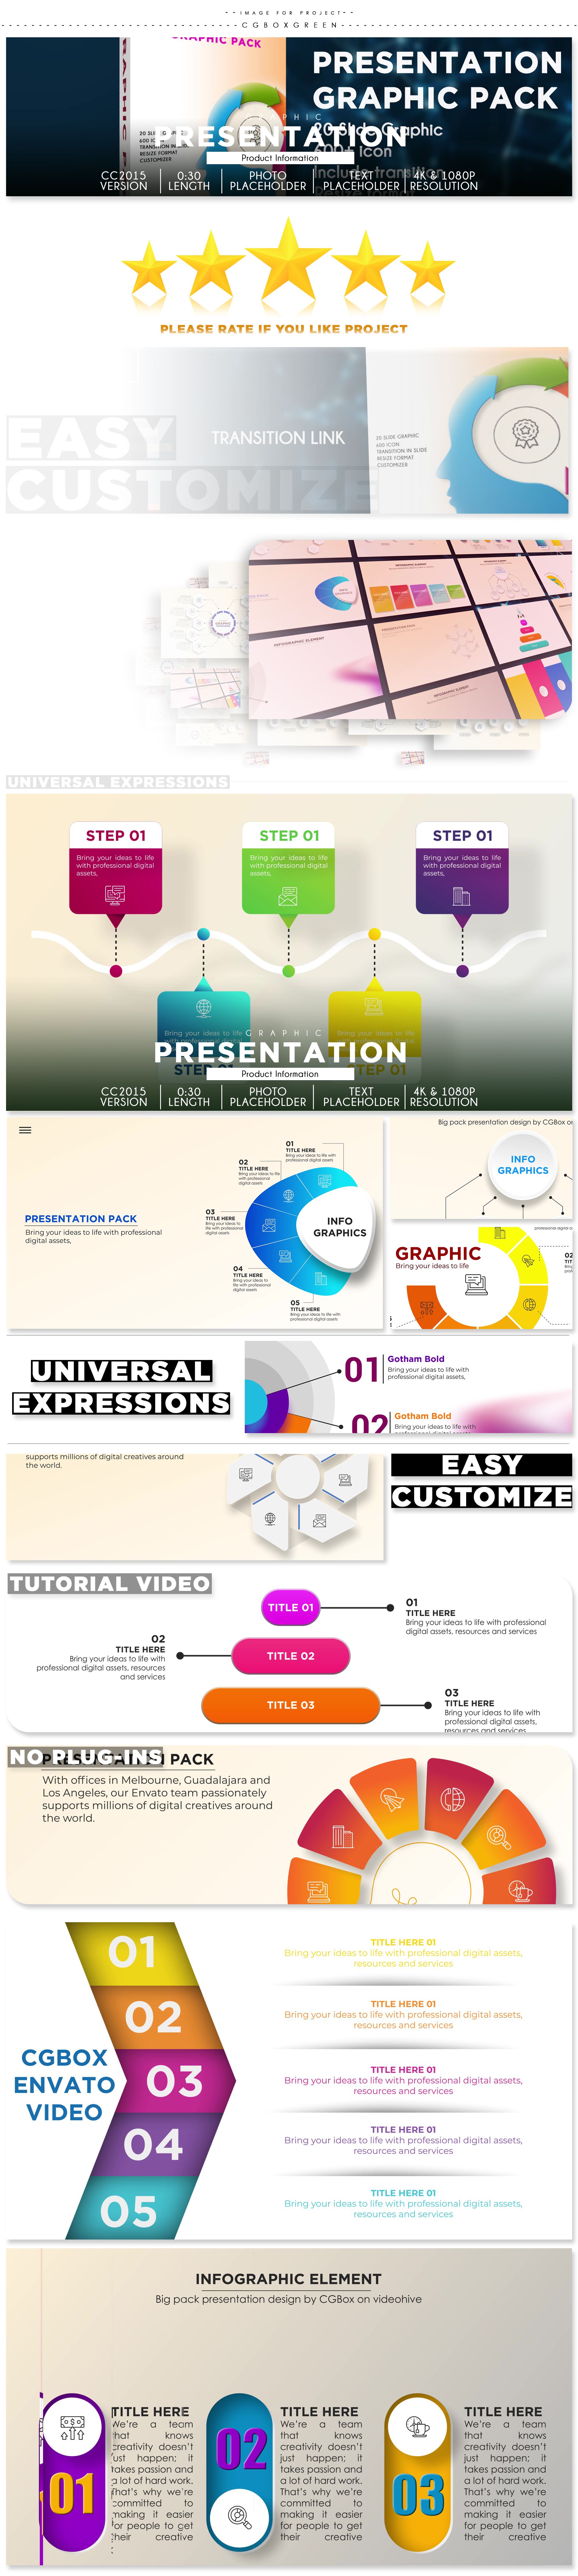  Presentation Graphic Pack 